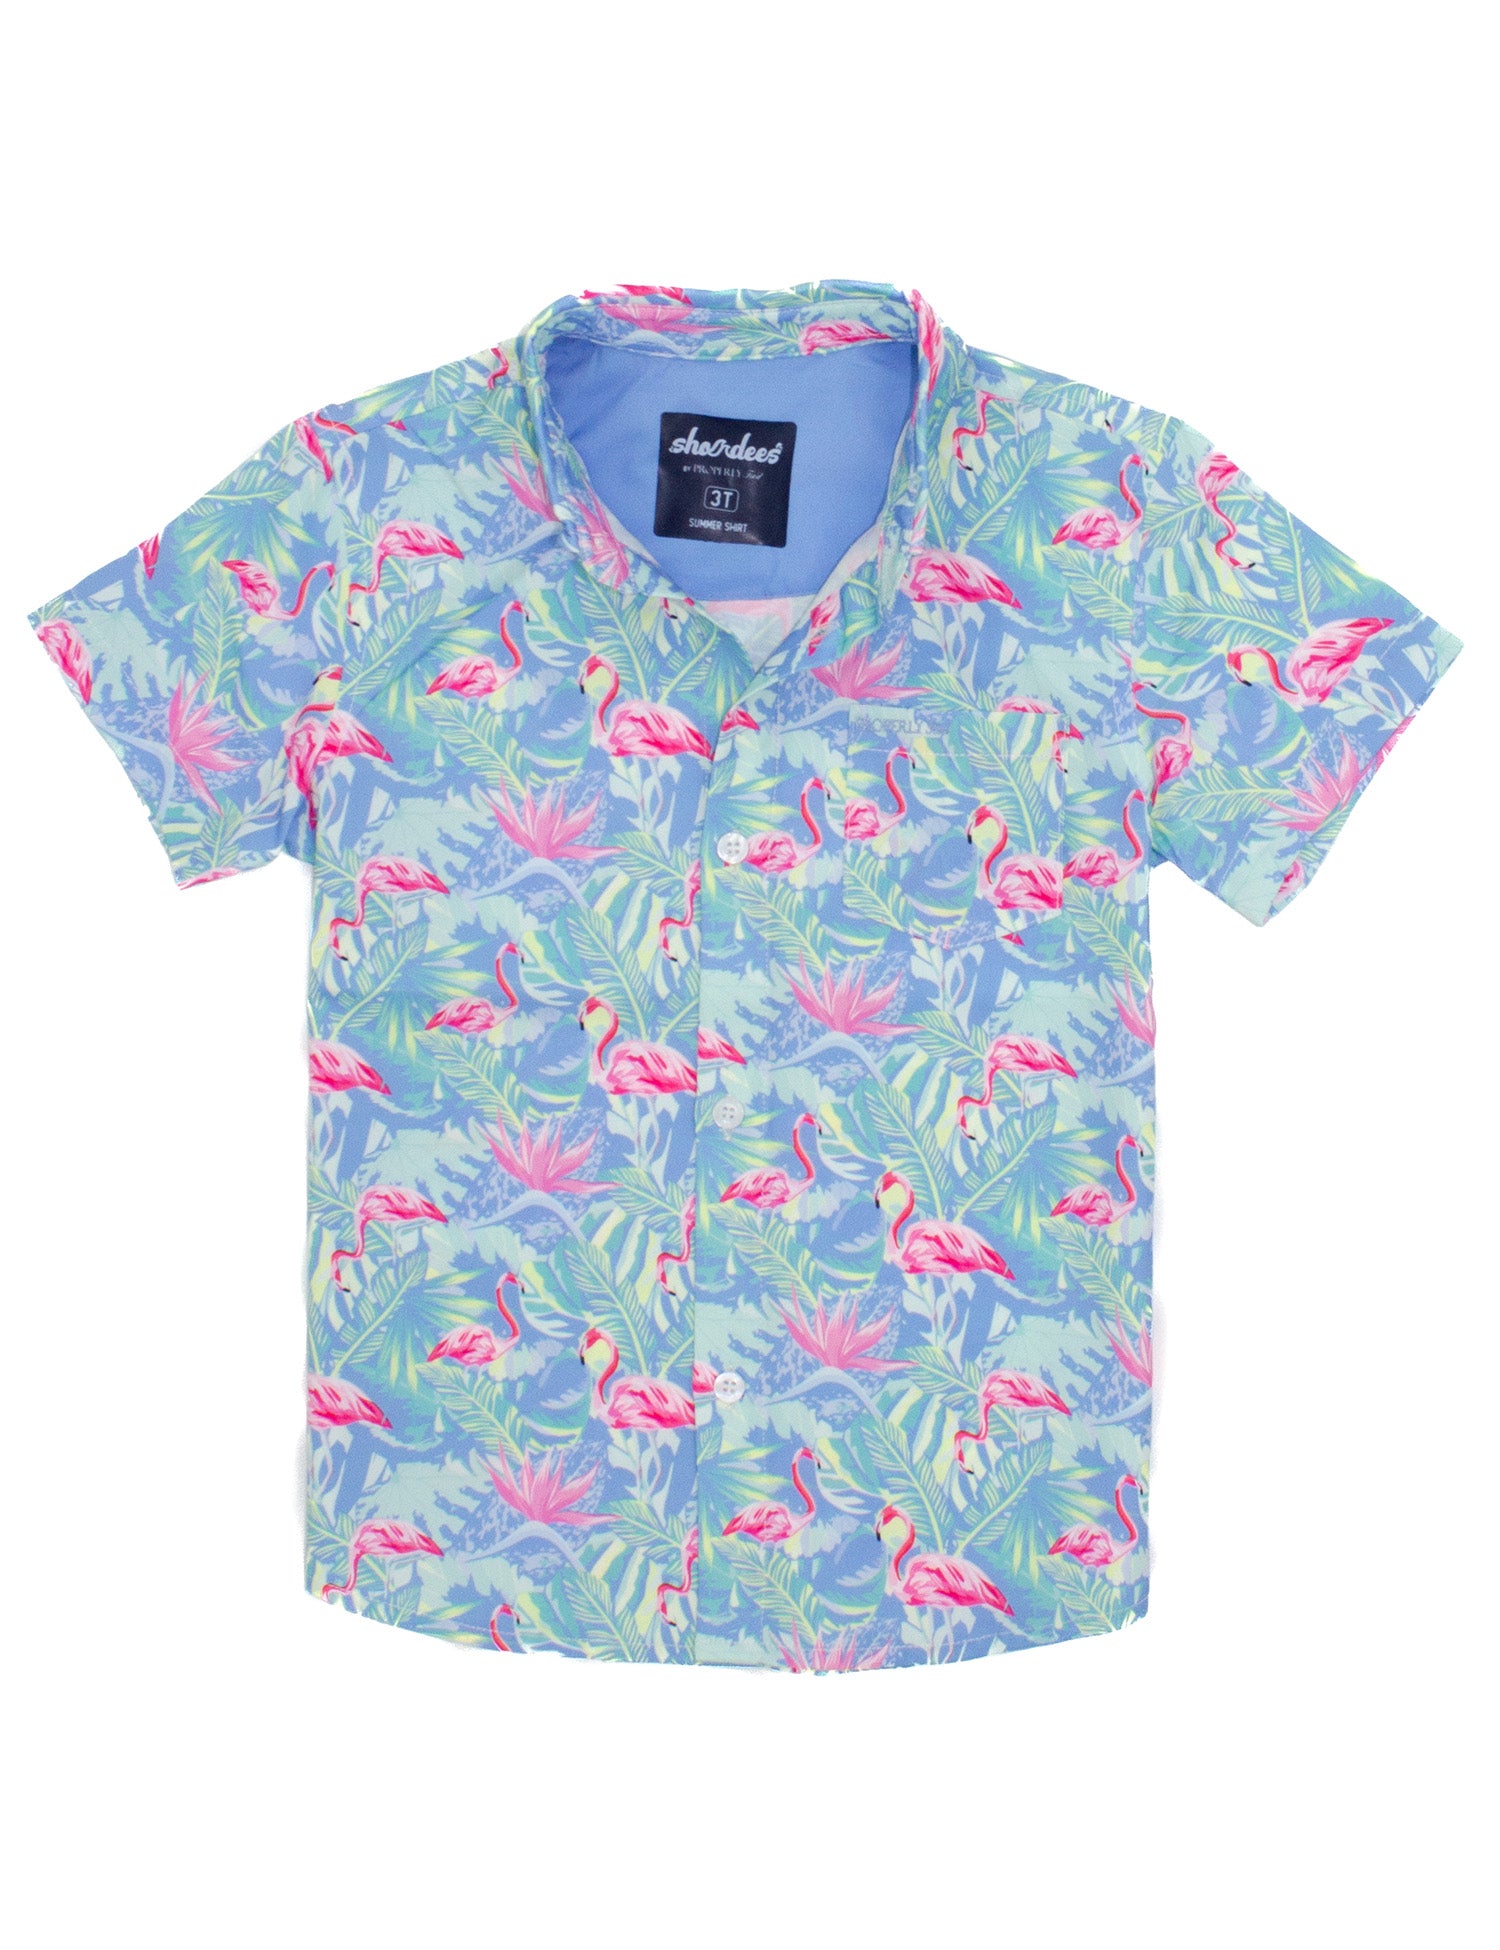 Boys Shordees Summer Shirt Floral Flamingo